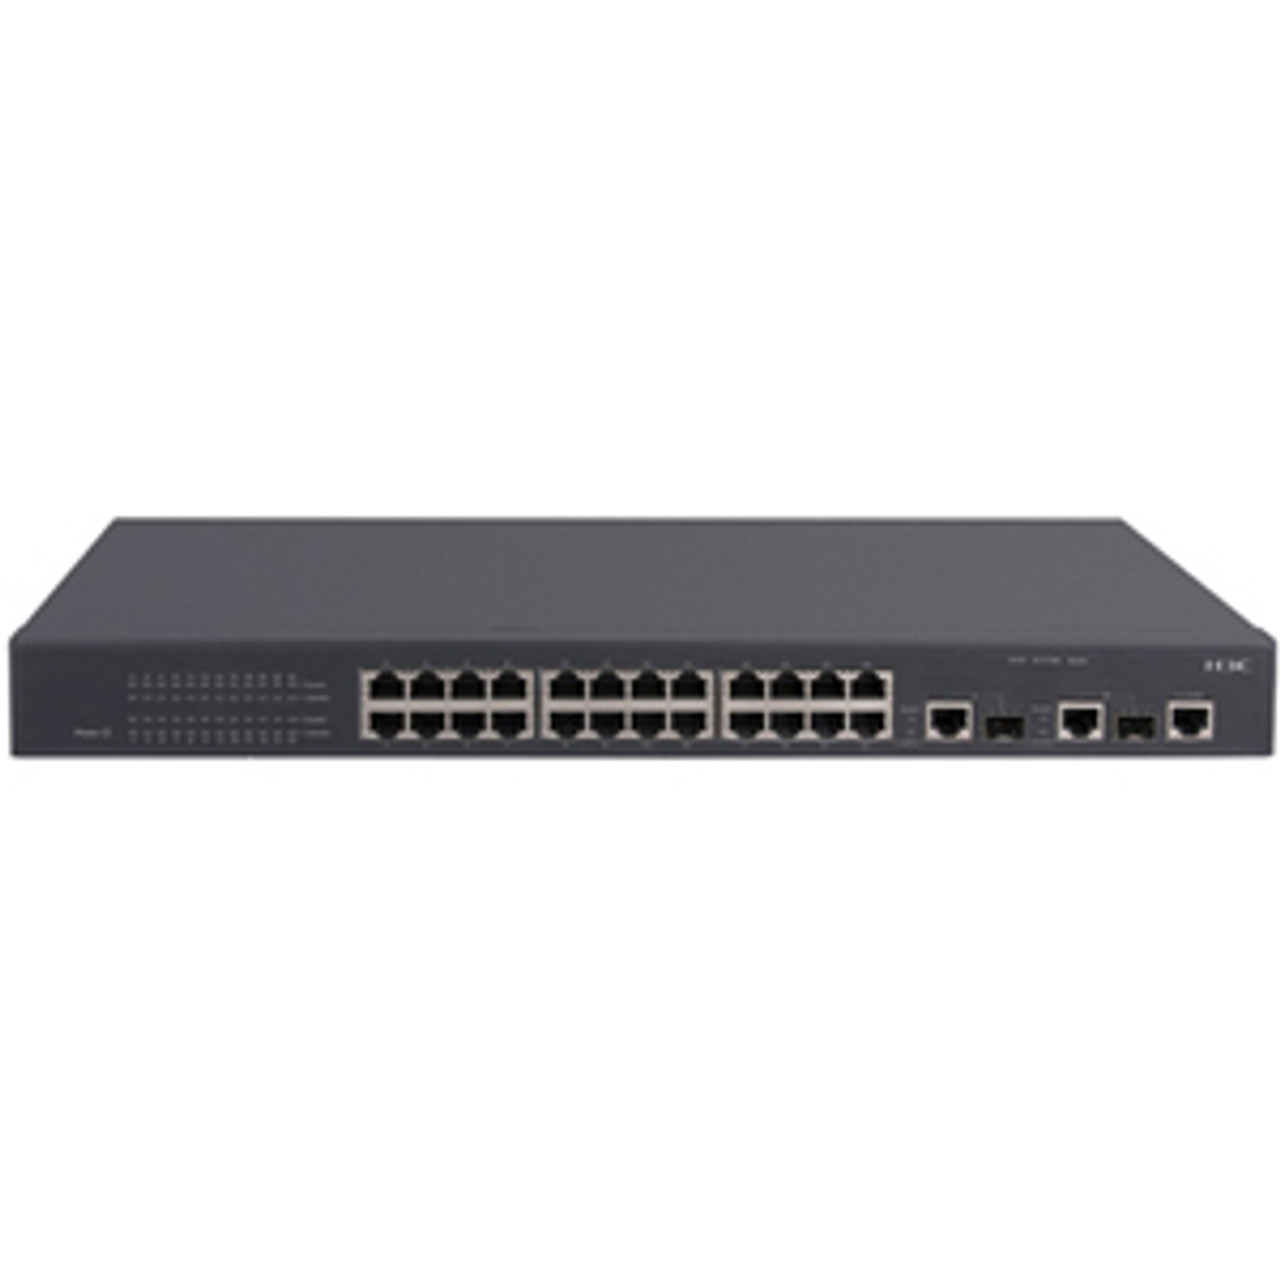 JD320A HP A3100-24 EI Ethernet Switch 26 Port 2 Slot 24 2 x 10/100/1000Base-T 10/100/1000Base-T 2 x SFP (mini-GBIC) (Refurbished)